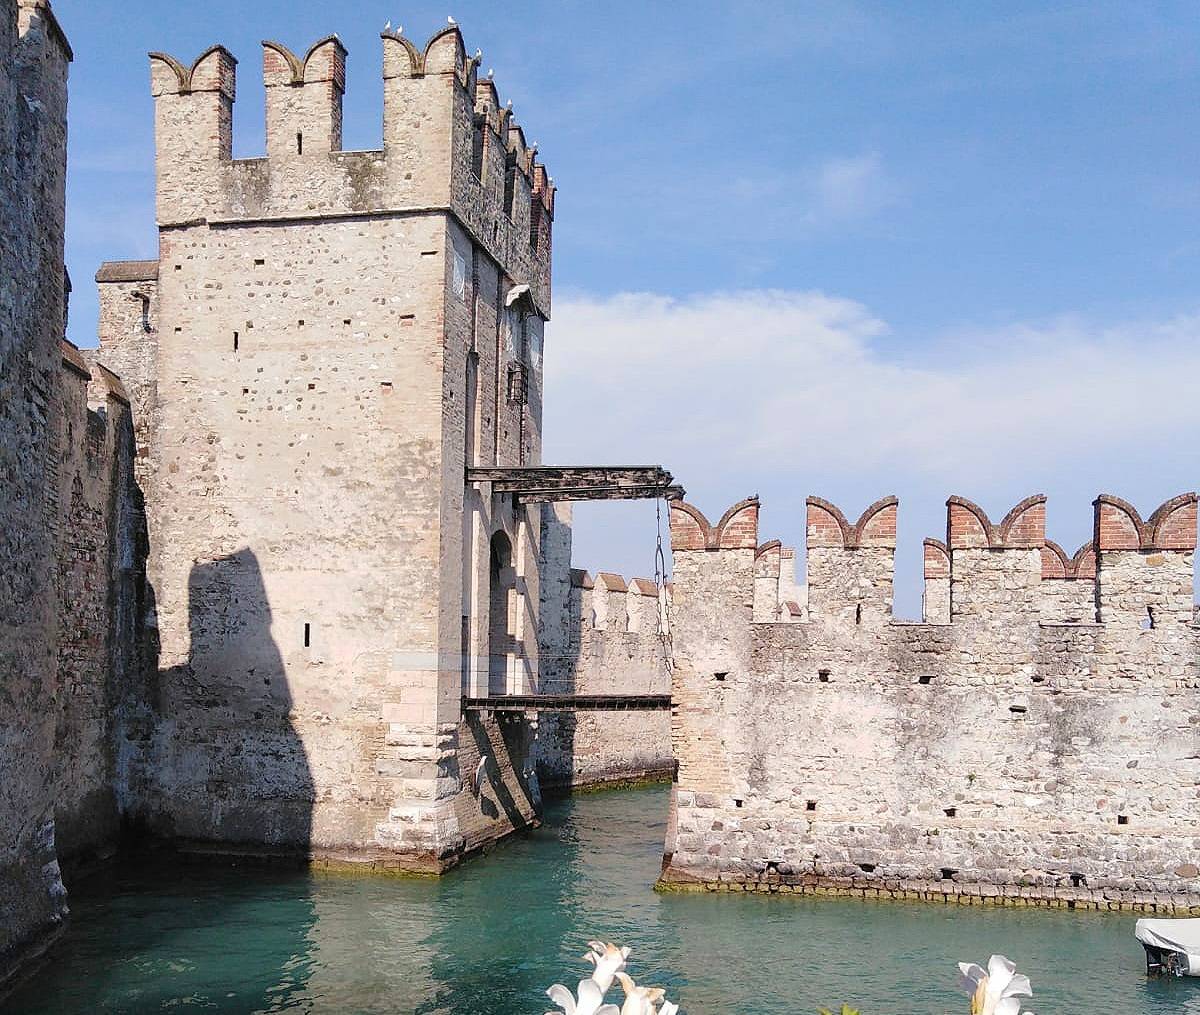 Castello Scaligero with its impressive battlements